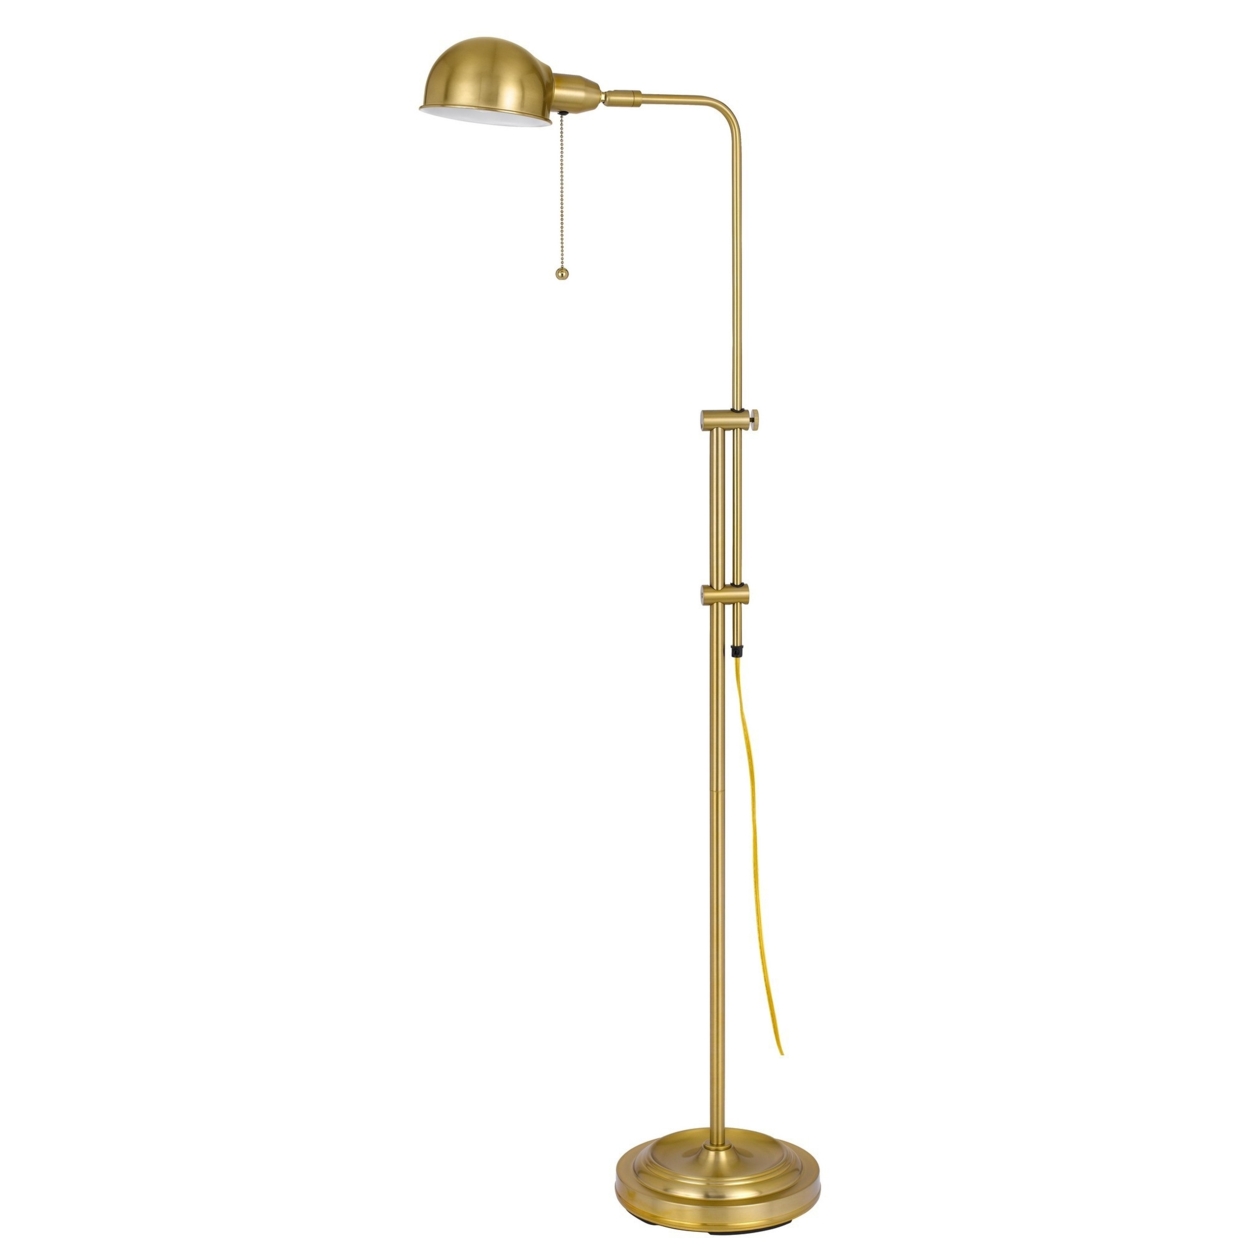 58 Inch Metal Floor Lamp, Adjustable Height, Chain Switch, Antique Brass- Saltoro Sherpi